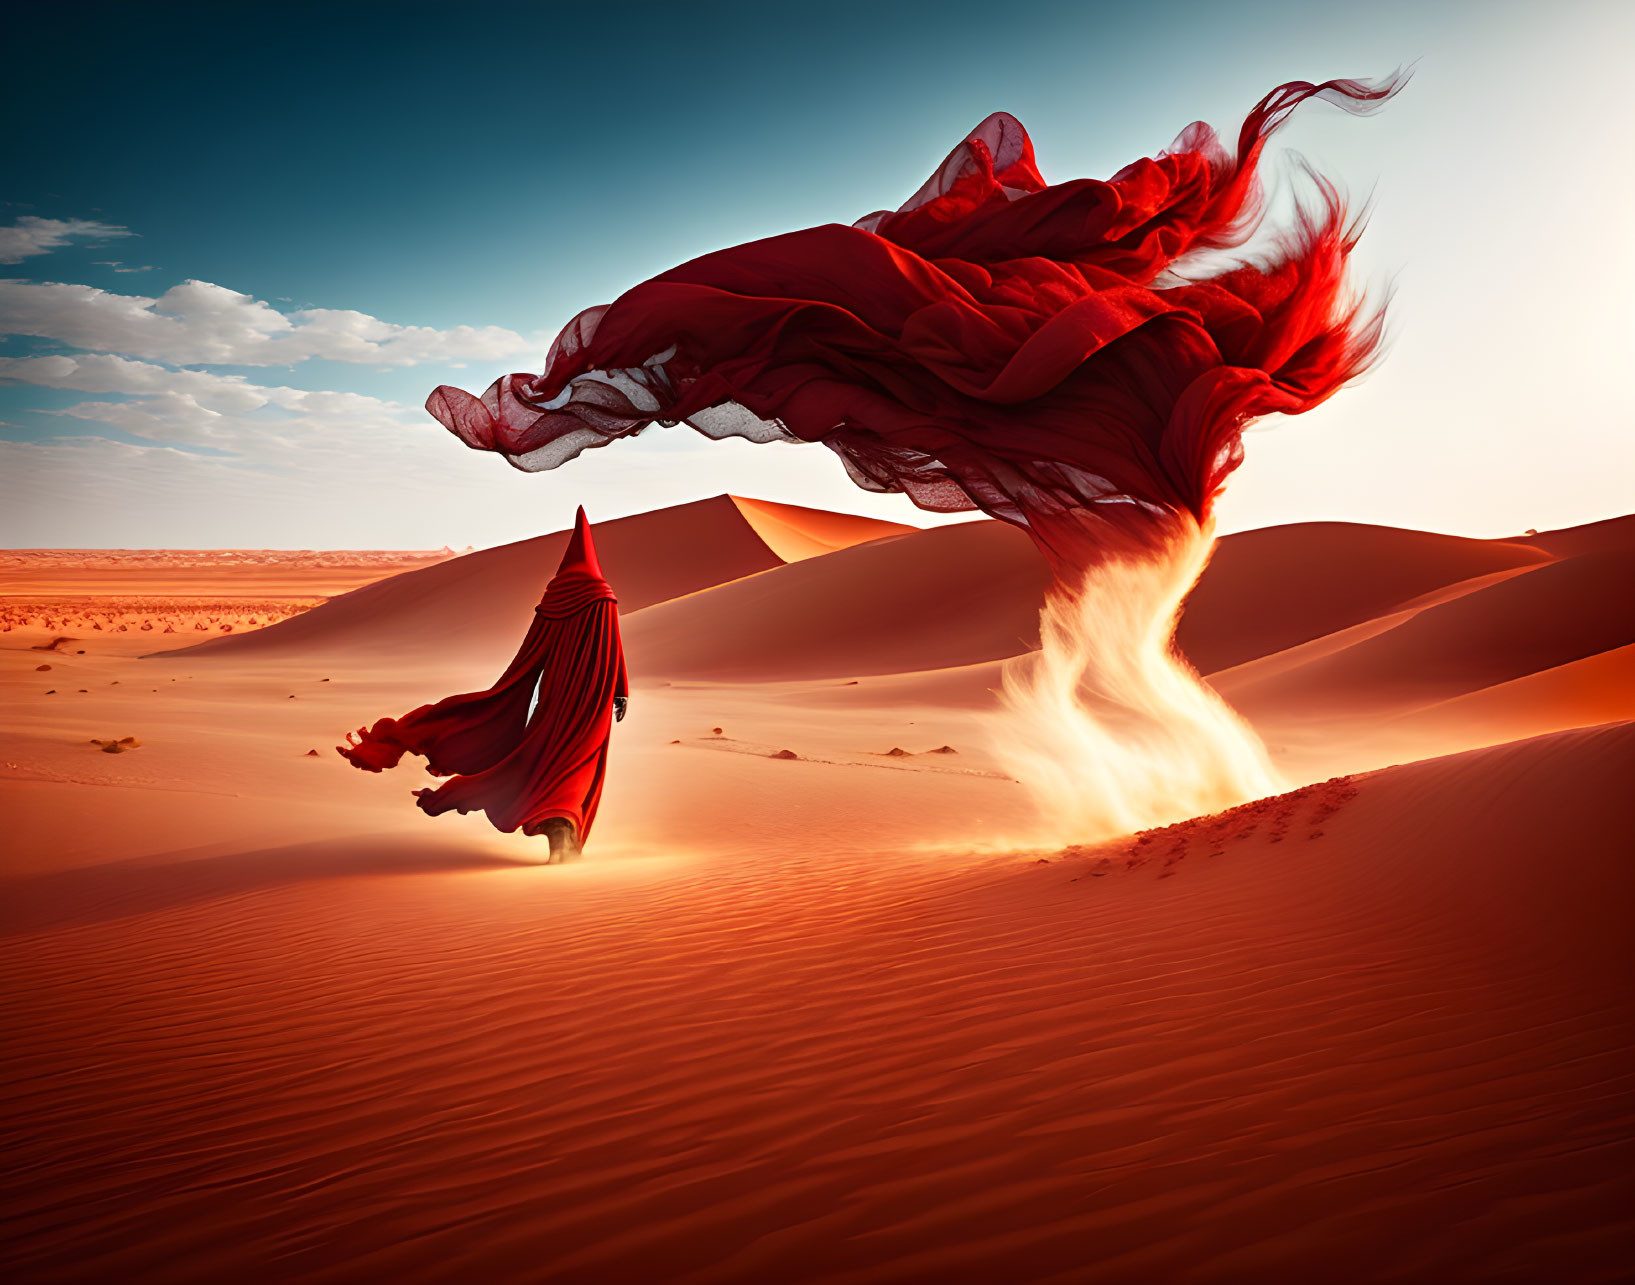 Person in red cloak on desert sand dune under blue sky